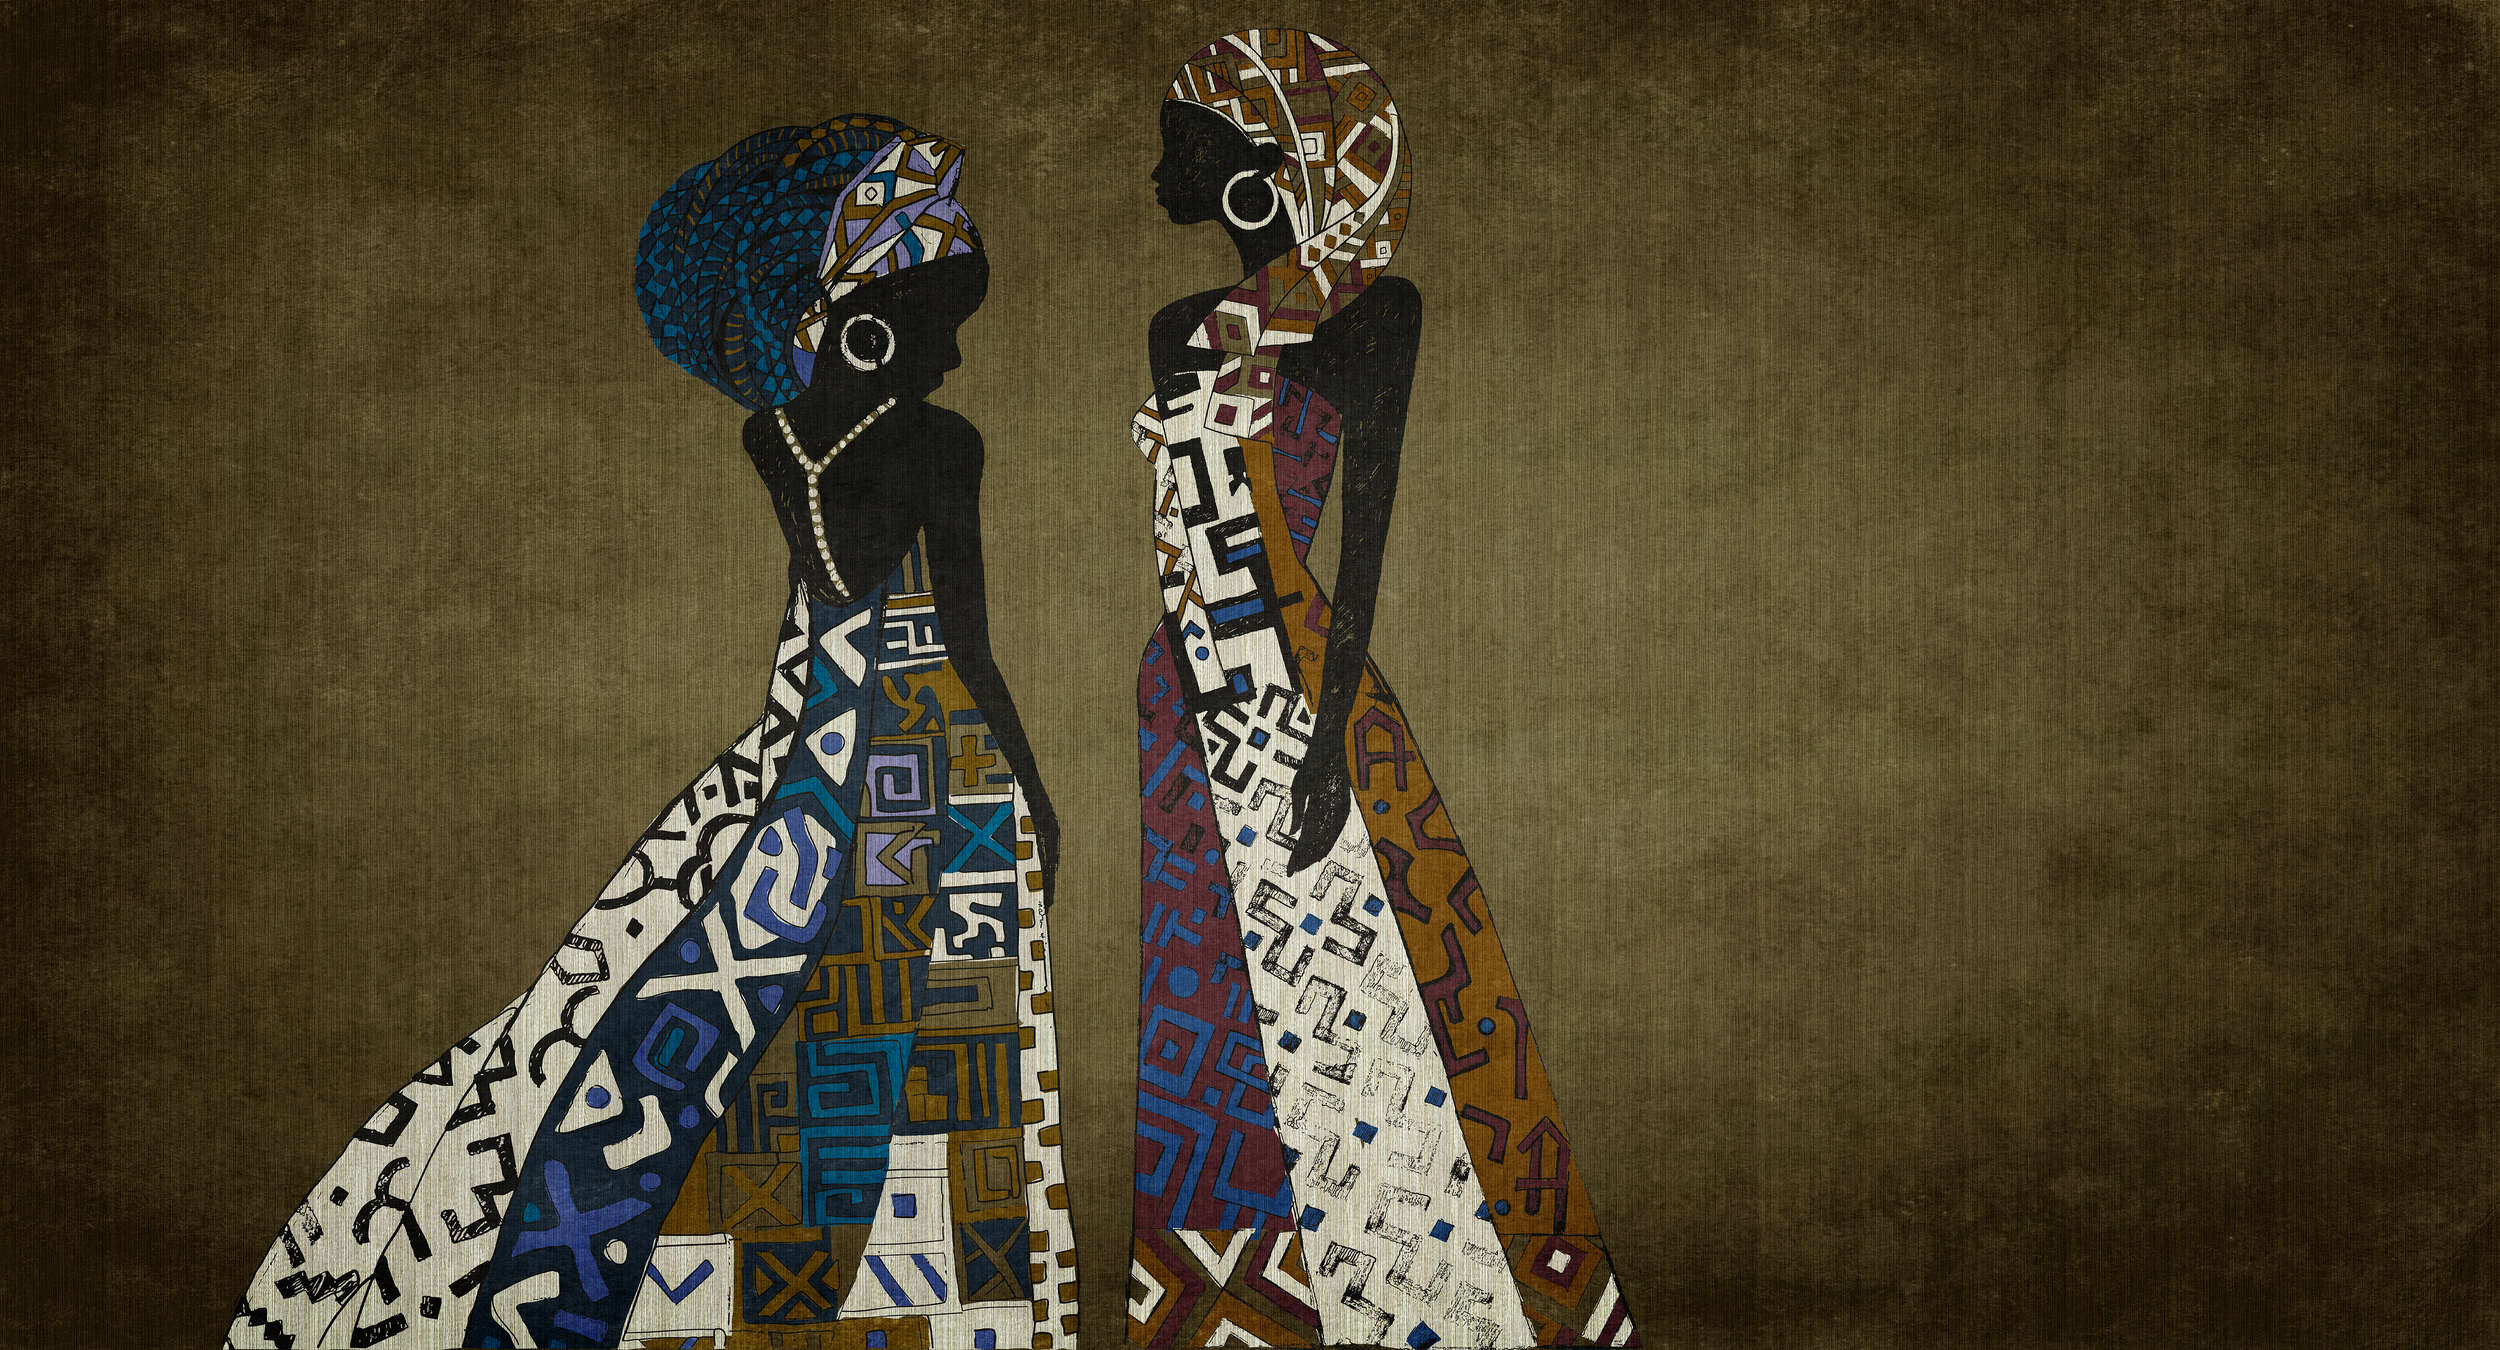             Nairobi 3 - Papier peint africain Dress Design avec motifs ethniques
        